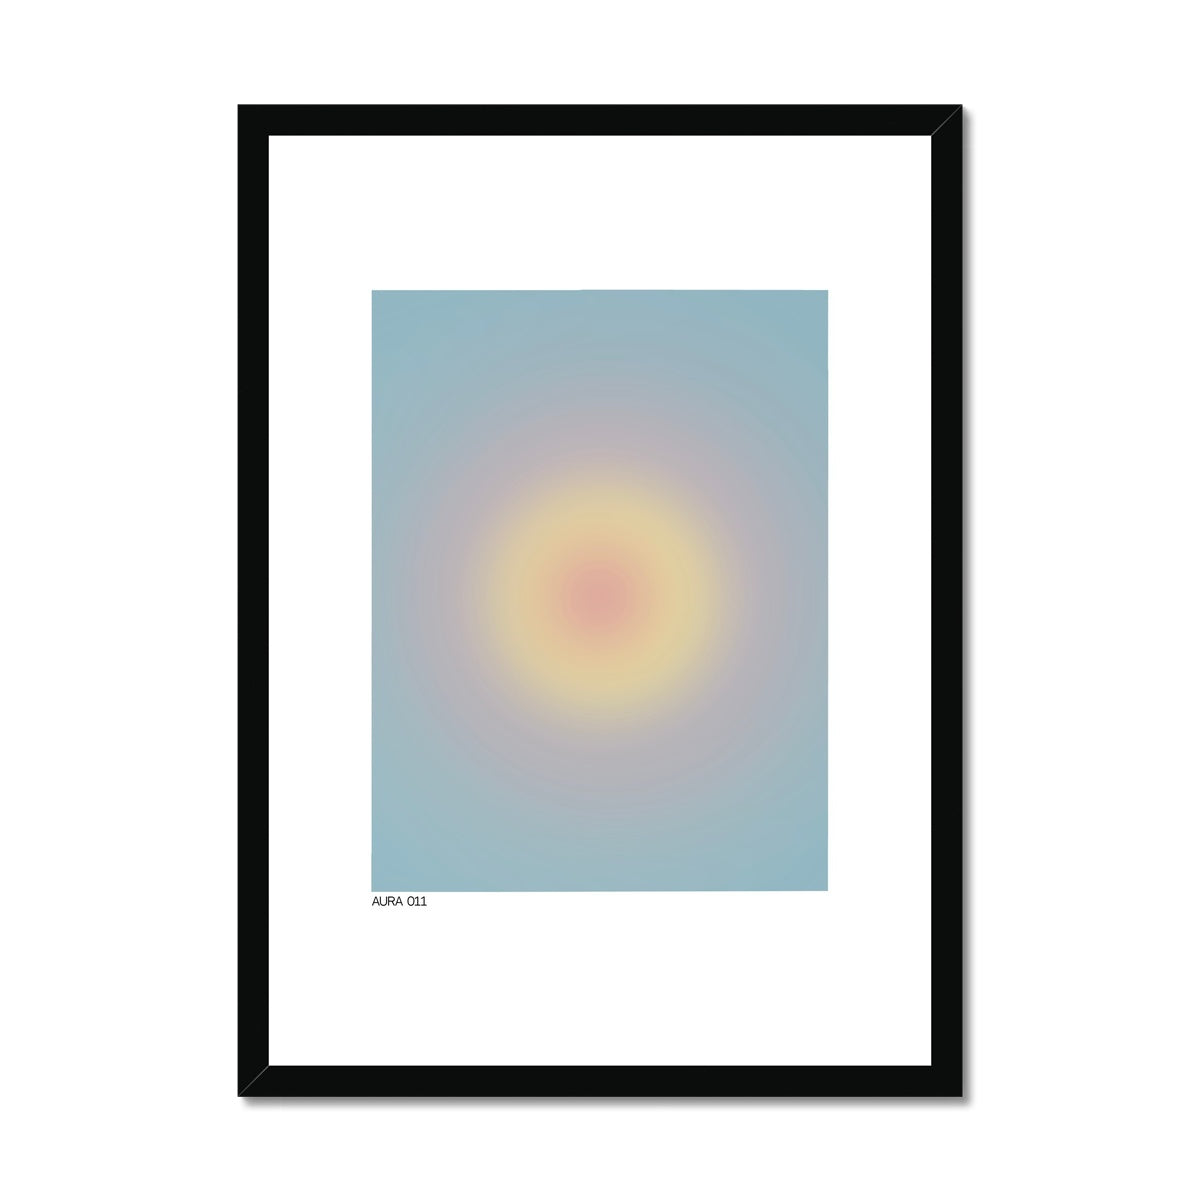 aura 011 Framed & Mounted Print